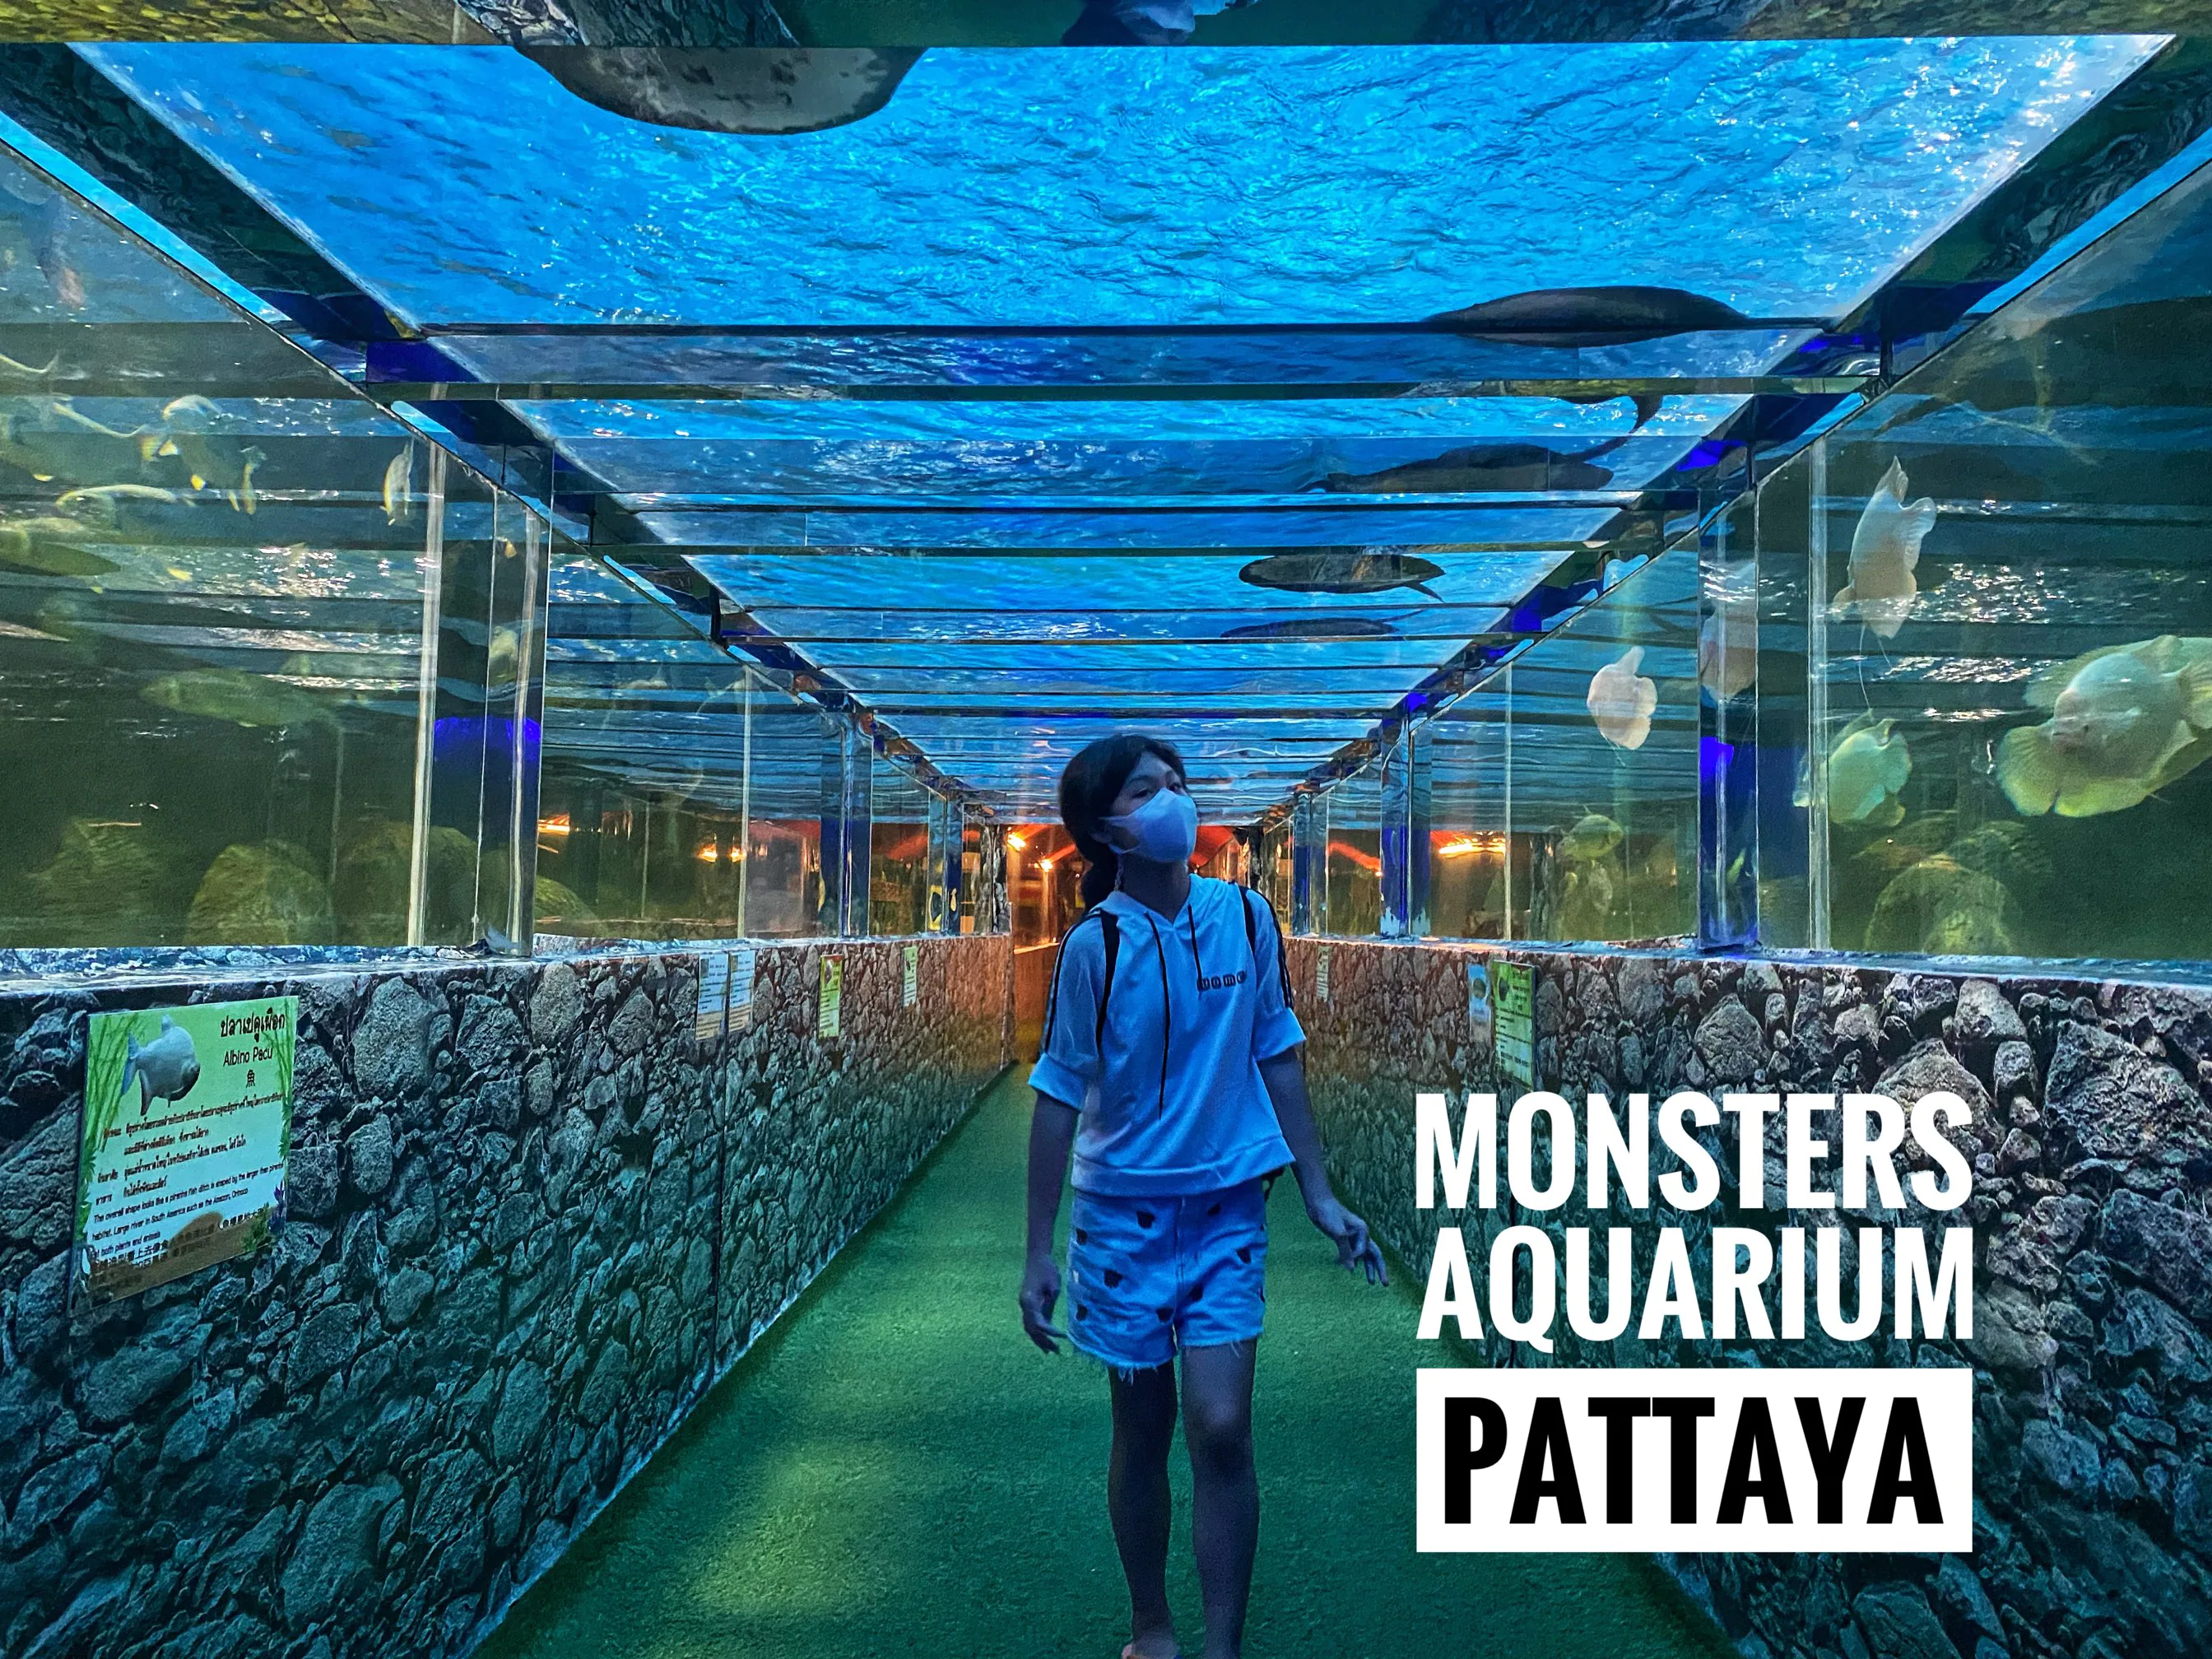 Monster aquarium pattaya (มอนสเตอร์อควาเรี่ยม พัทยา)